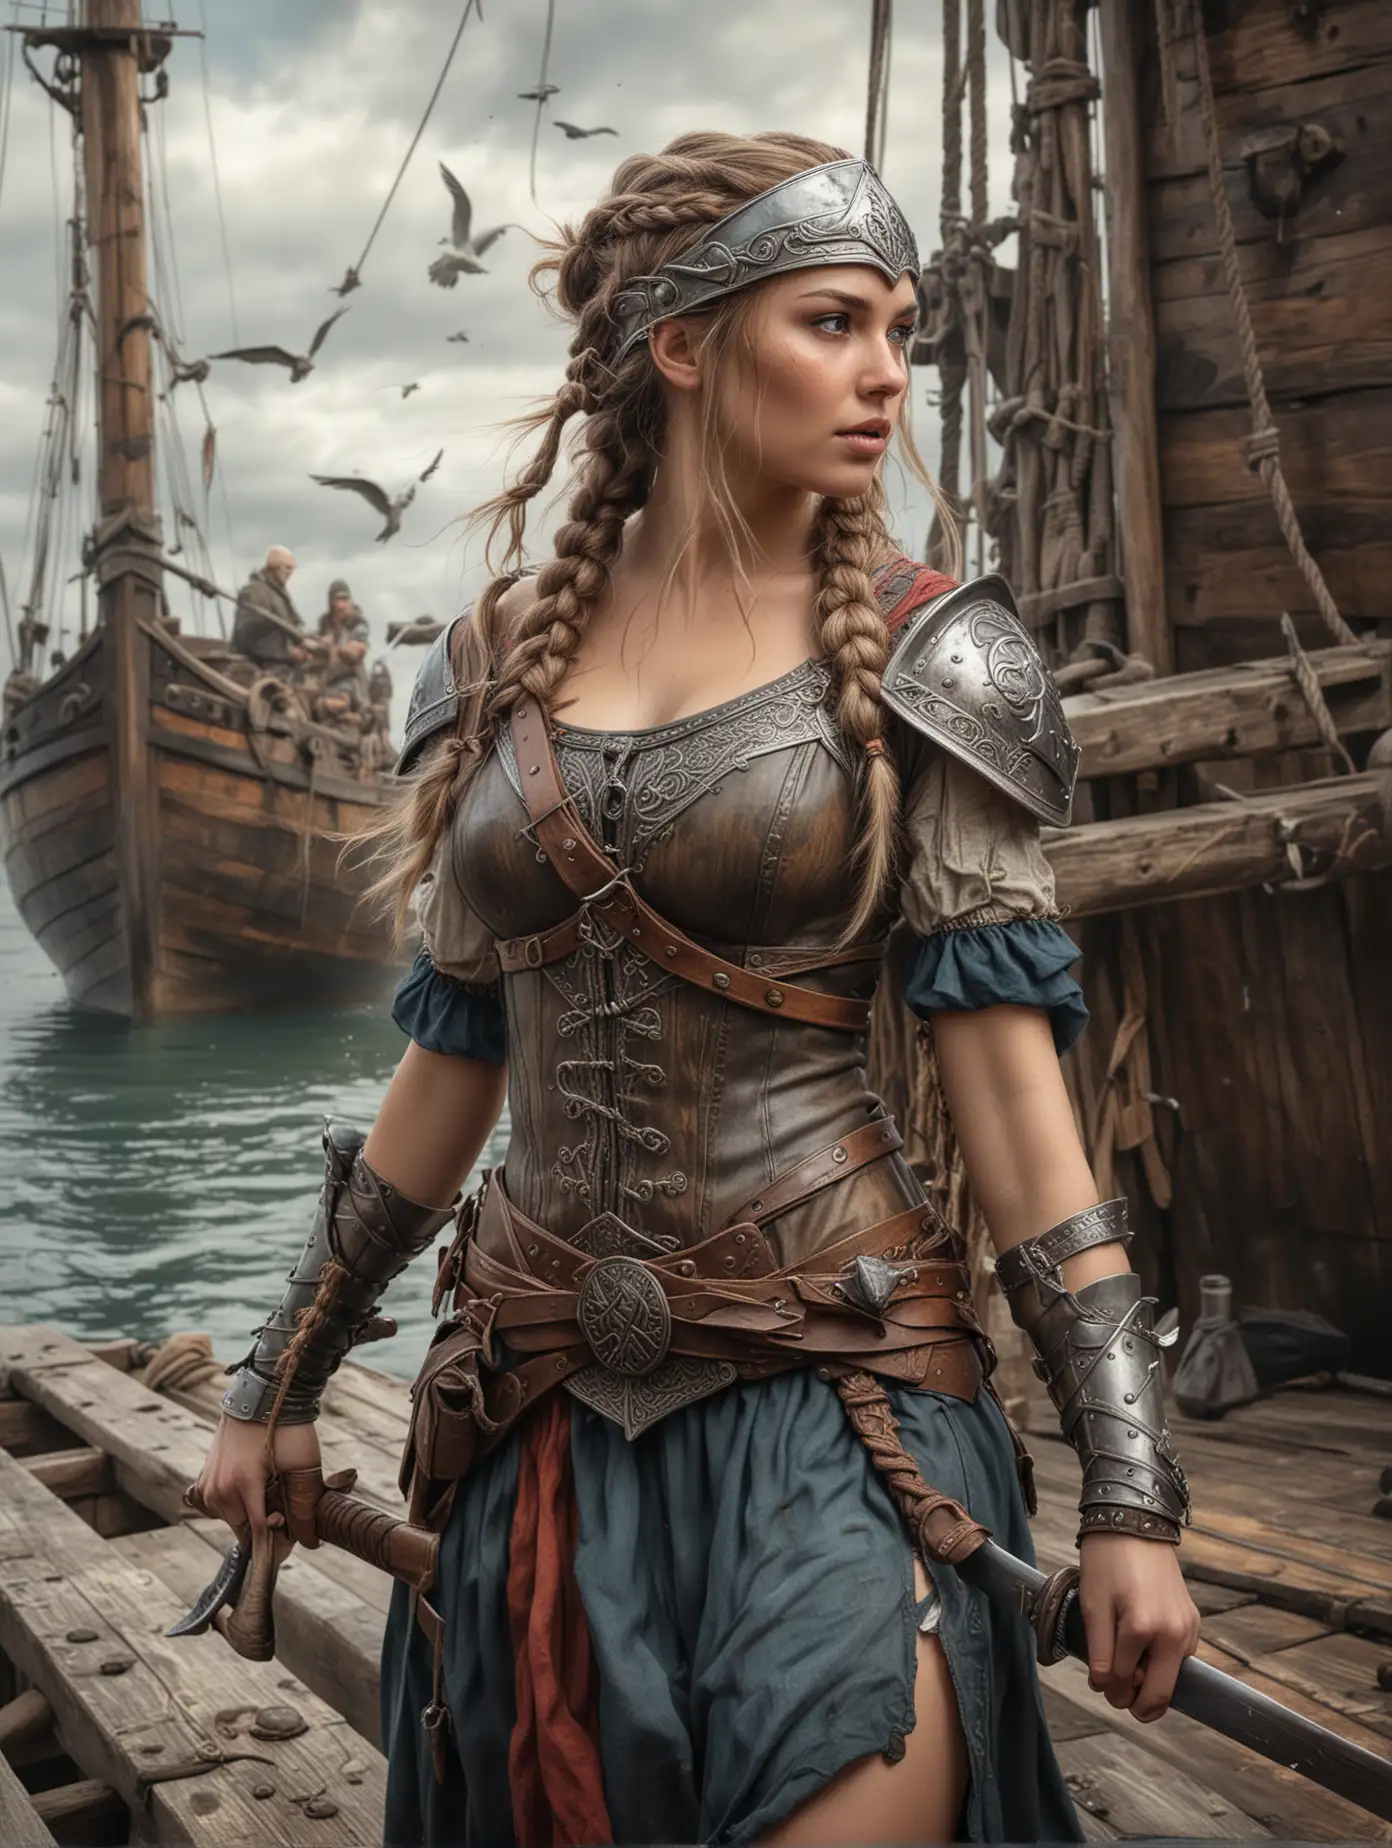 Beauty-European-Woman-Cosplaying-Viking-Warrior-on-Wooden-Ship-Deck